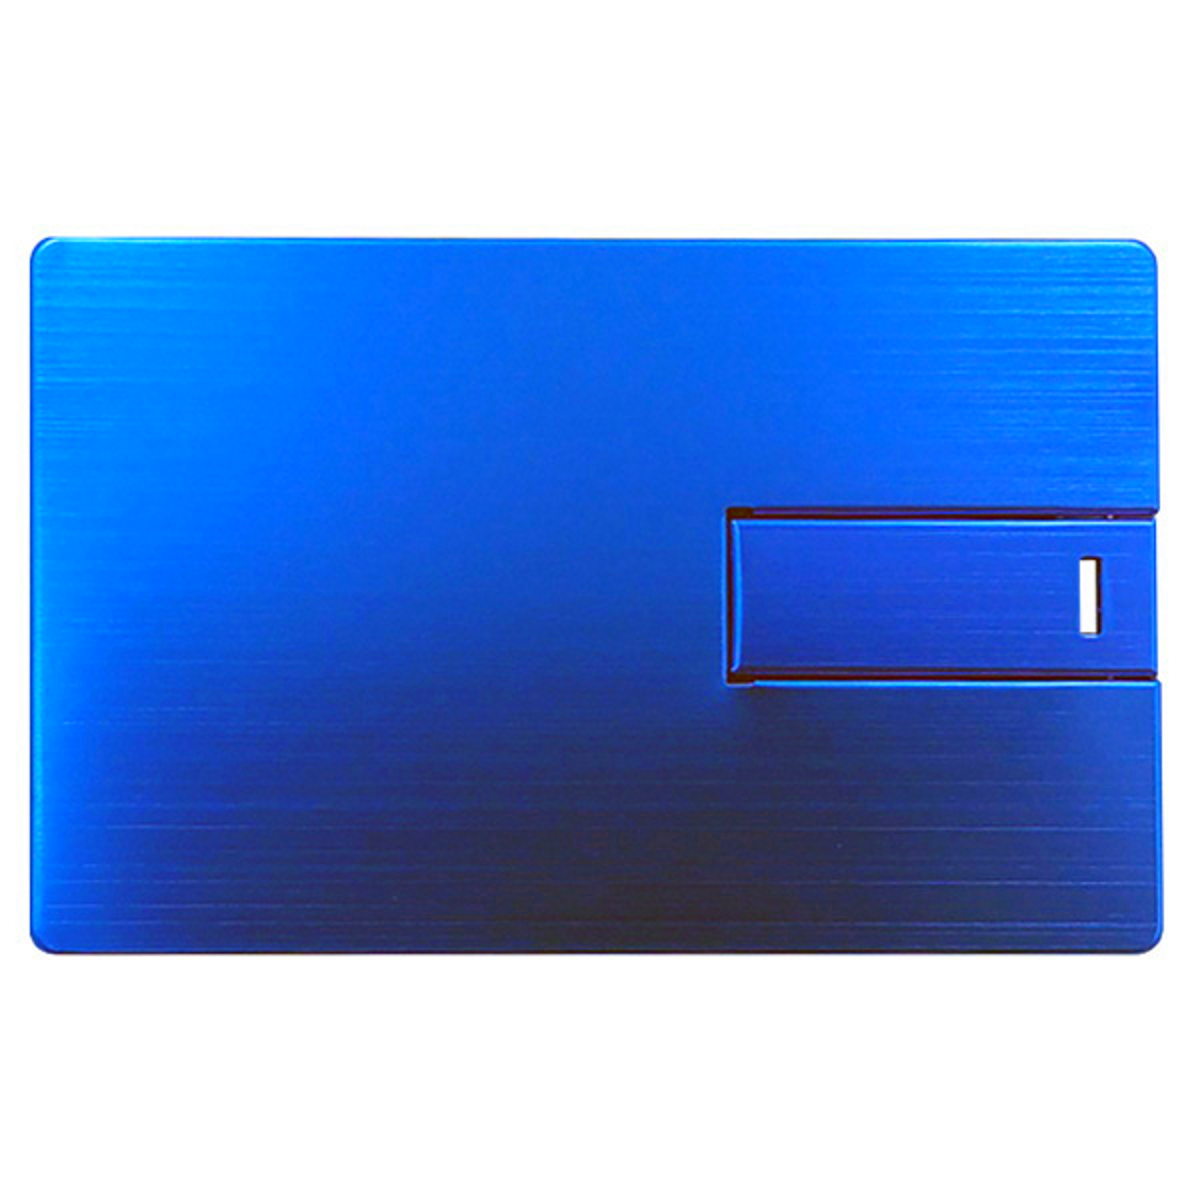 8 ® GERMANY (Blau, GB) Metall-Kreditkarte USB USB-Stick